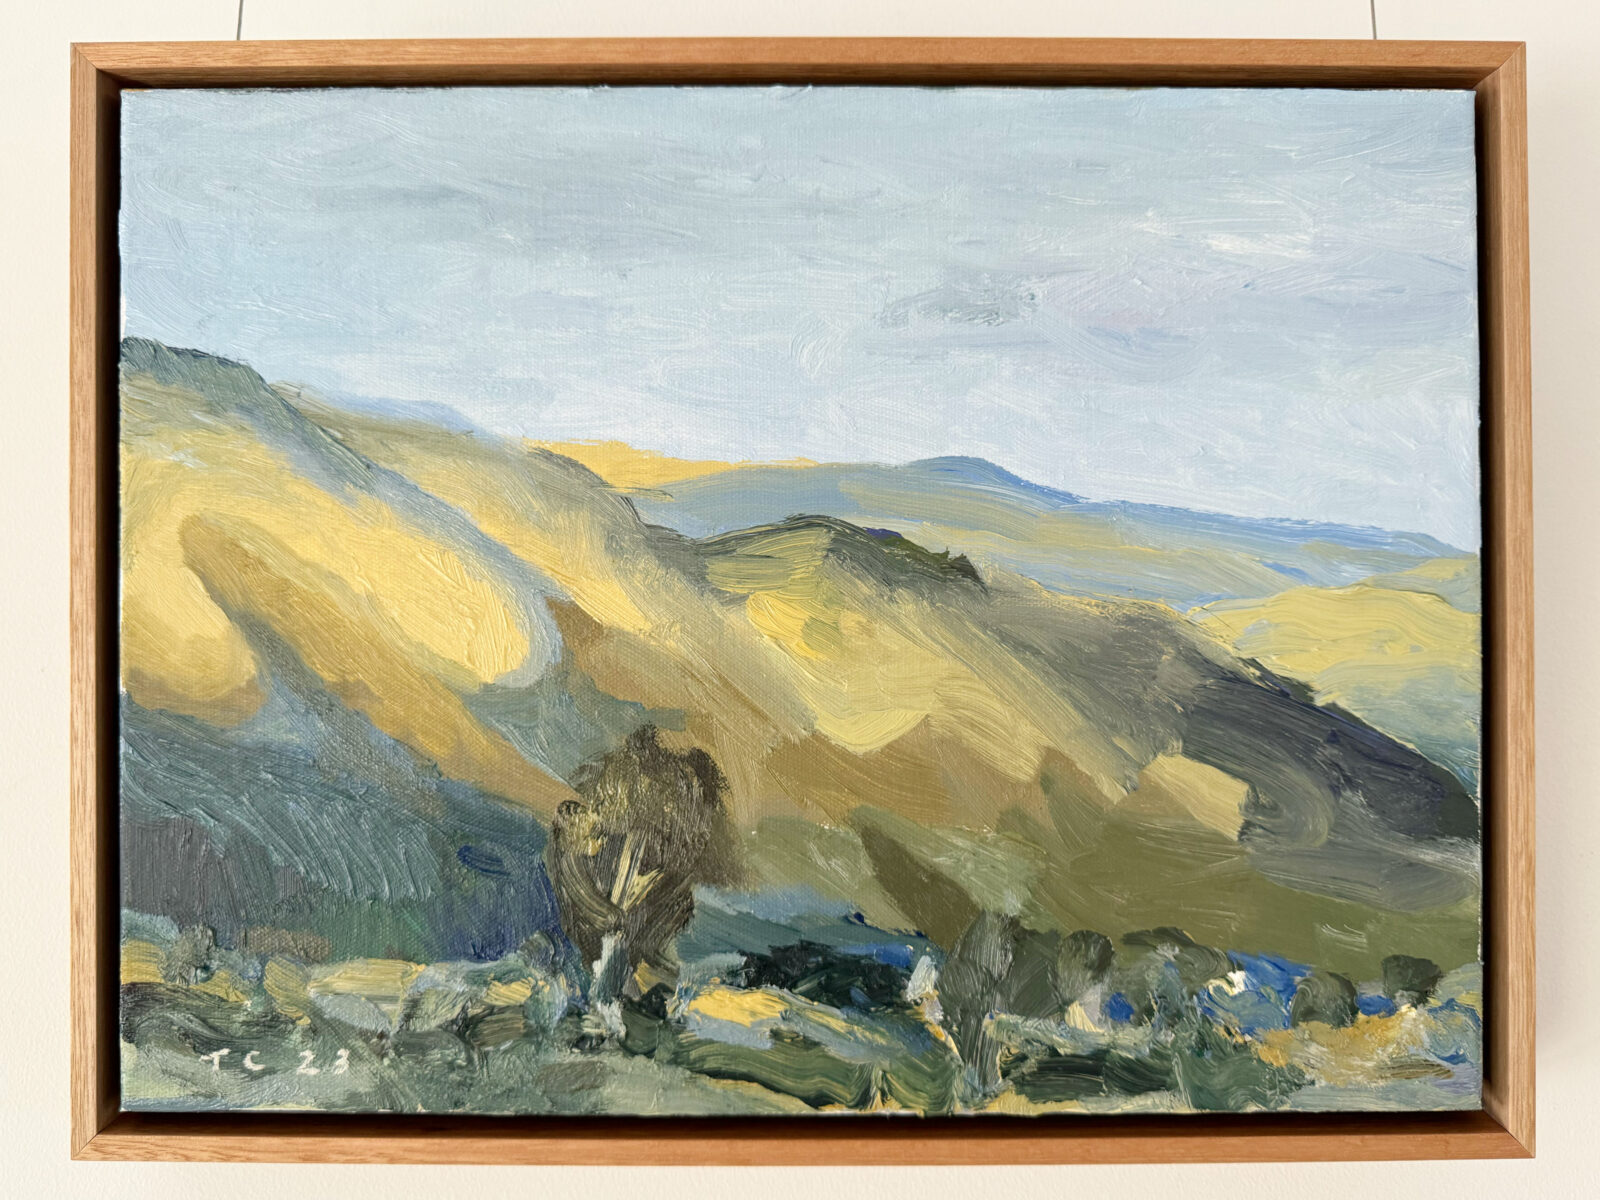 Sunlit Ridge | Tony Coles | oil on canvas | 30 x 40 cm, framed in oak | $1,450